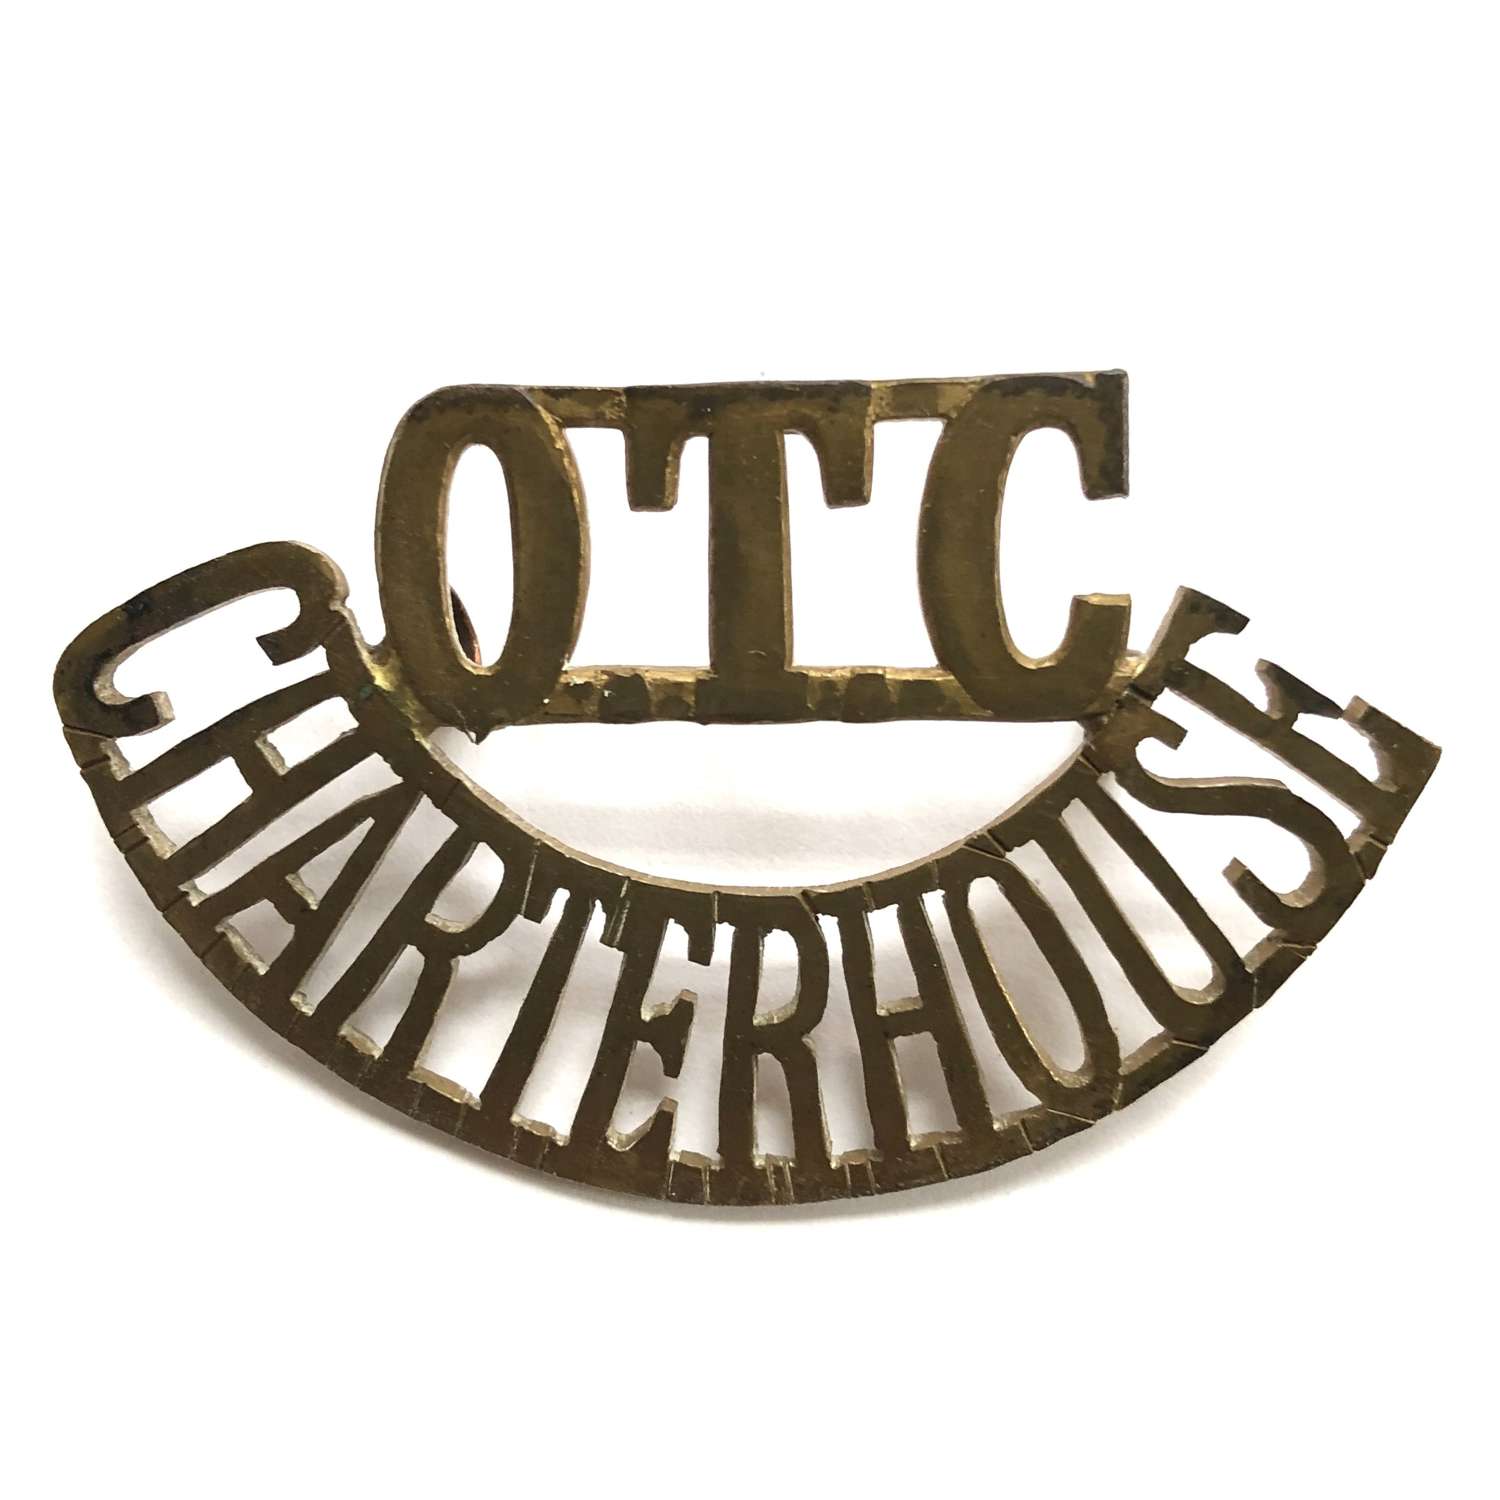 OTC / CHARTERHOUSE Surrey shoulder title circa 1908-40